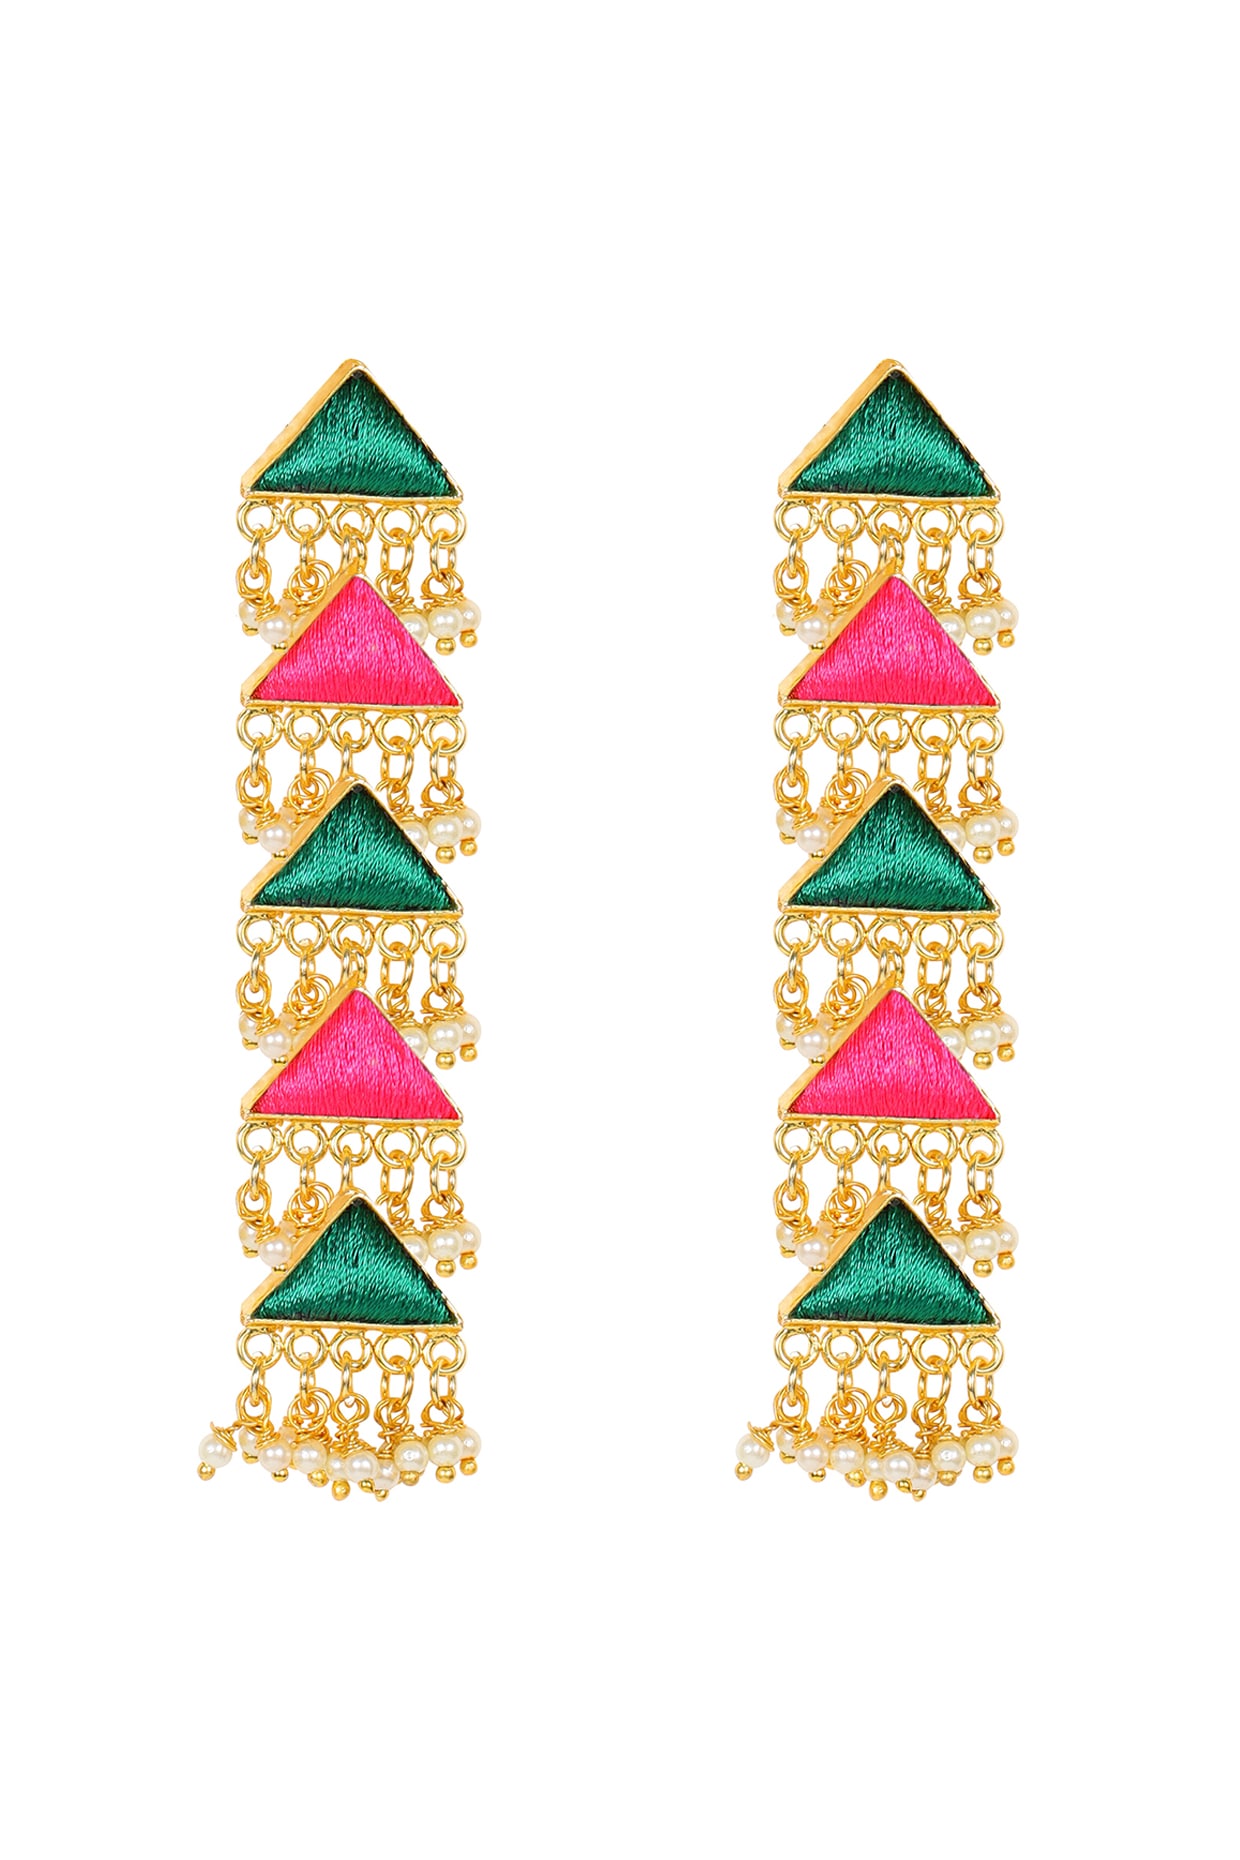 Share more than 126 triangle shape earrings gold